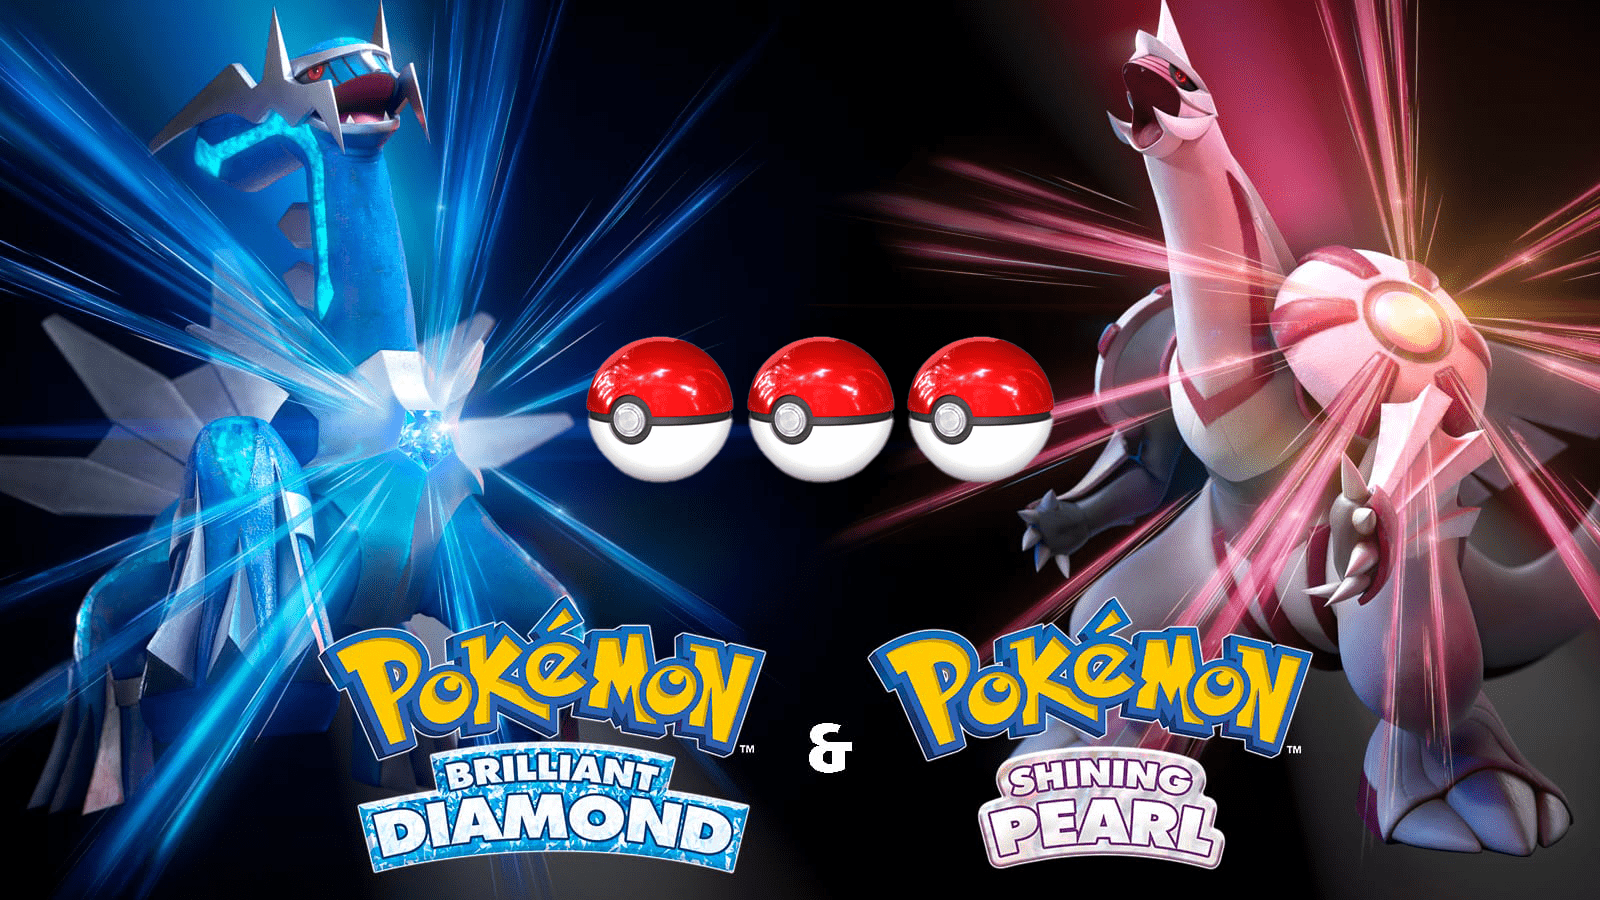 When Does 'Pokemon GO's' Brilliant Diamond Event End & When Does